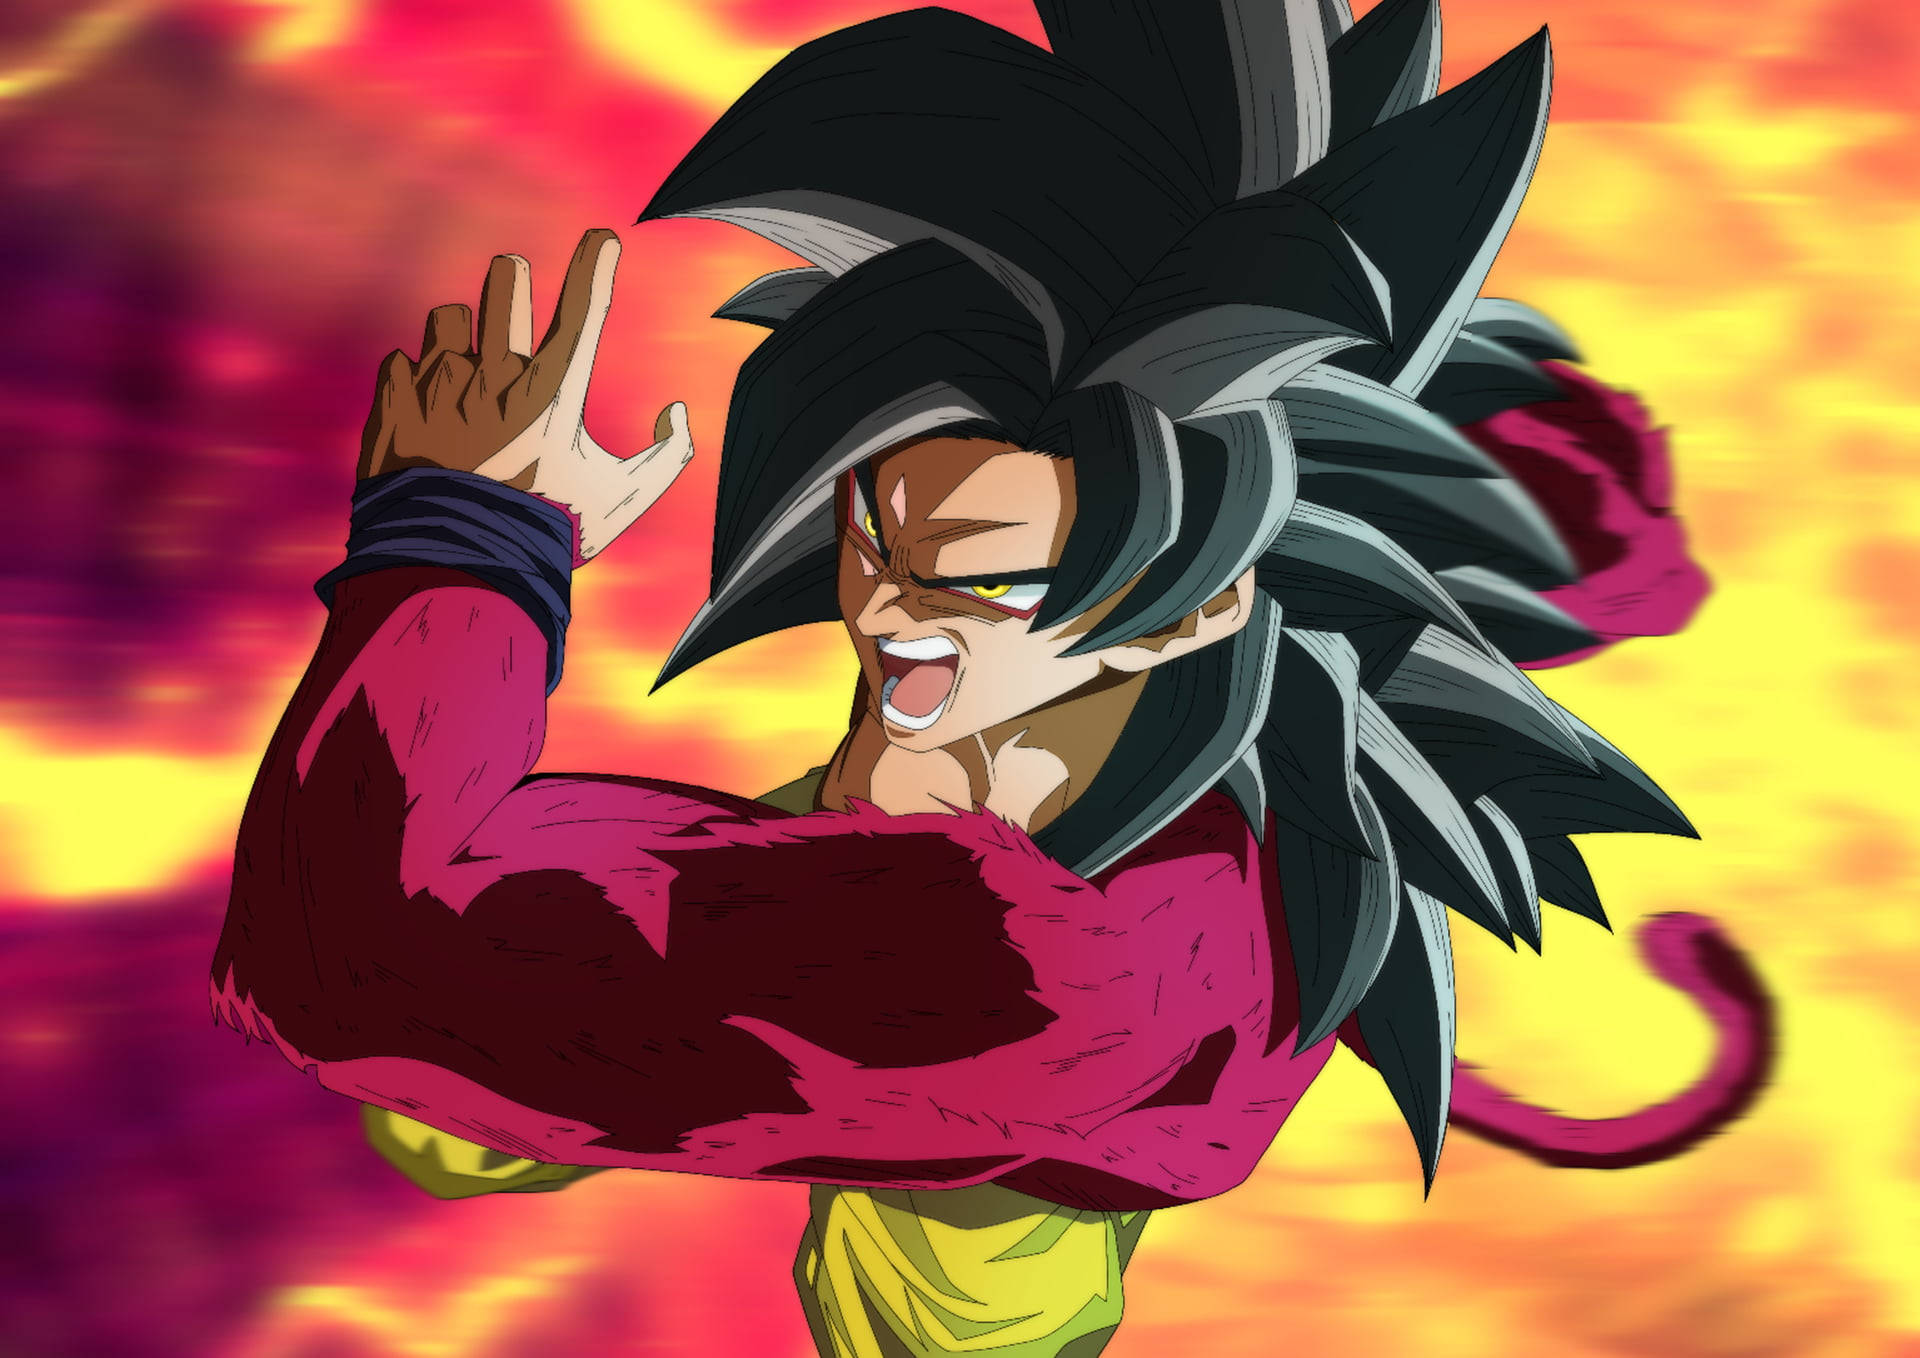 Goku fighting pose by marvelmania | Dragon ball wallpapers, Dragon ball  art, Fighting drawing